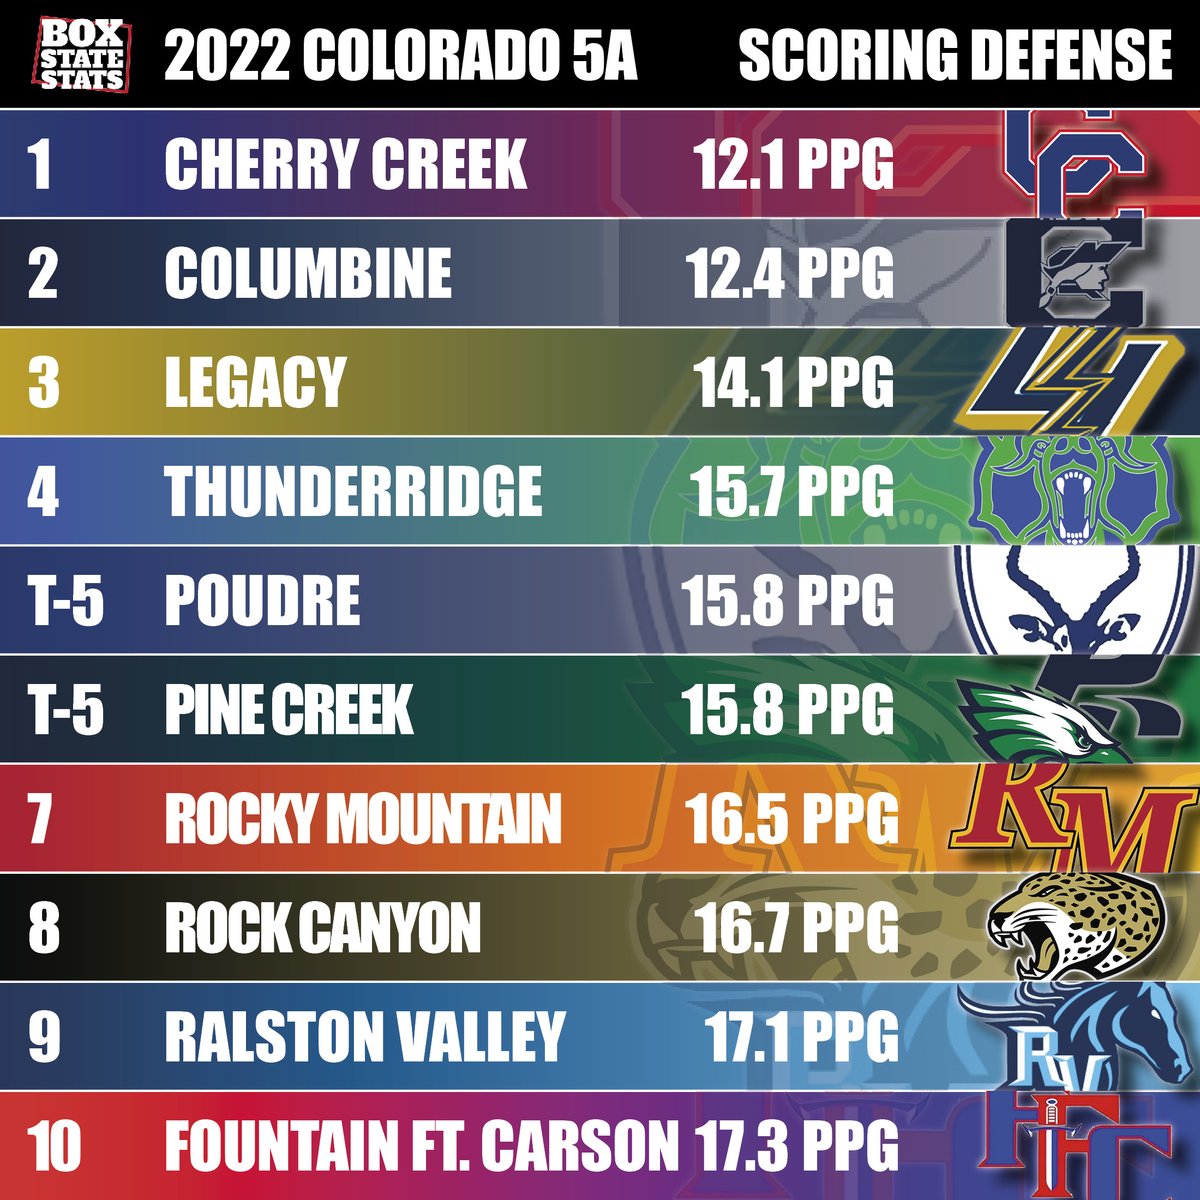 2022 Colorado 5A scoring defenses led by State Champ @CreekFB, followed by: @RebelballCHS @LegacyFootball @TR_GrizzliesFB @PoudreFootball @pinecreek_fb @RM_LoboFootball @RCHSFootball1 @FootballRalston @ffchsfootball